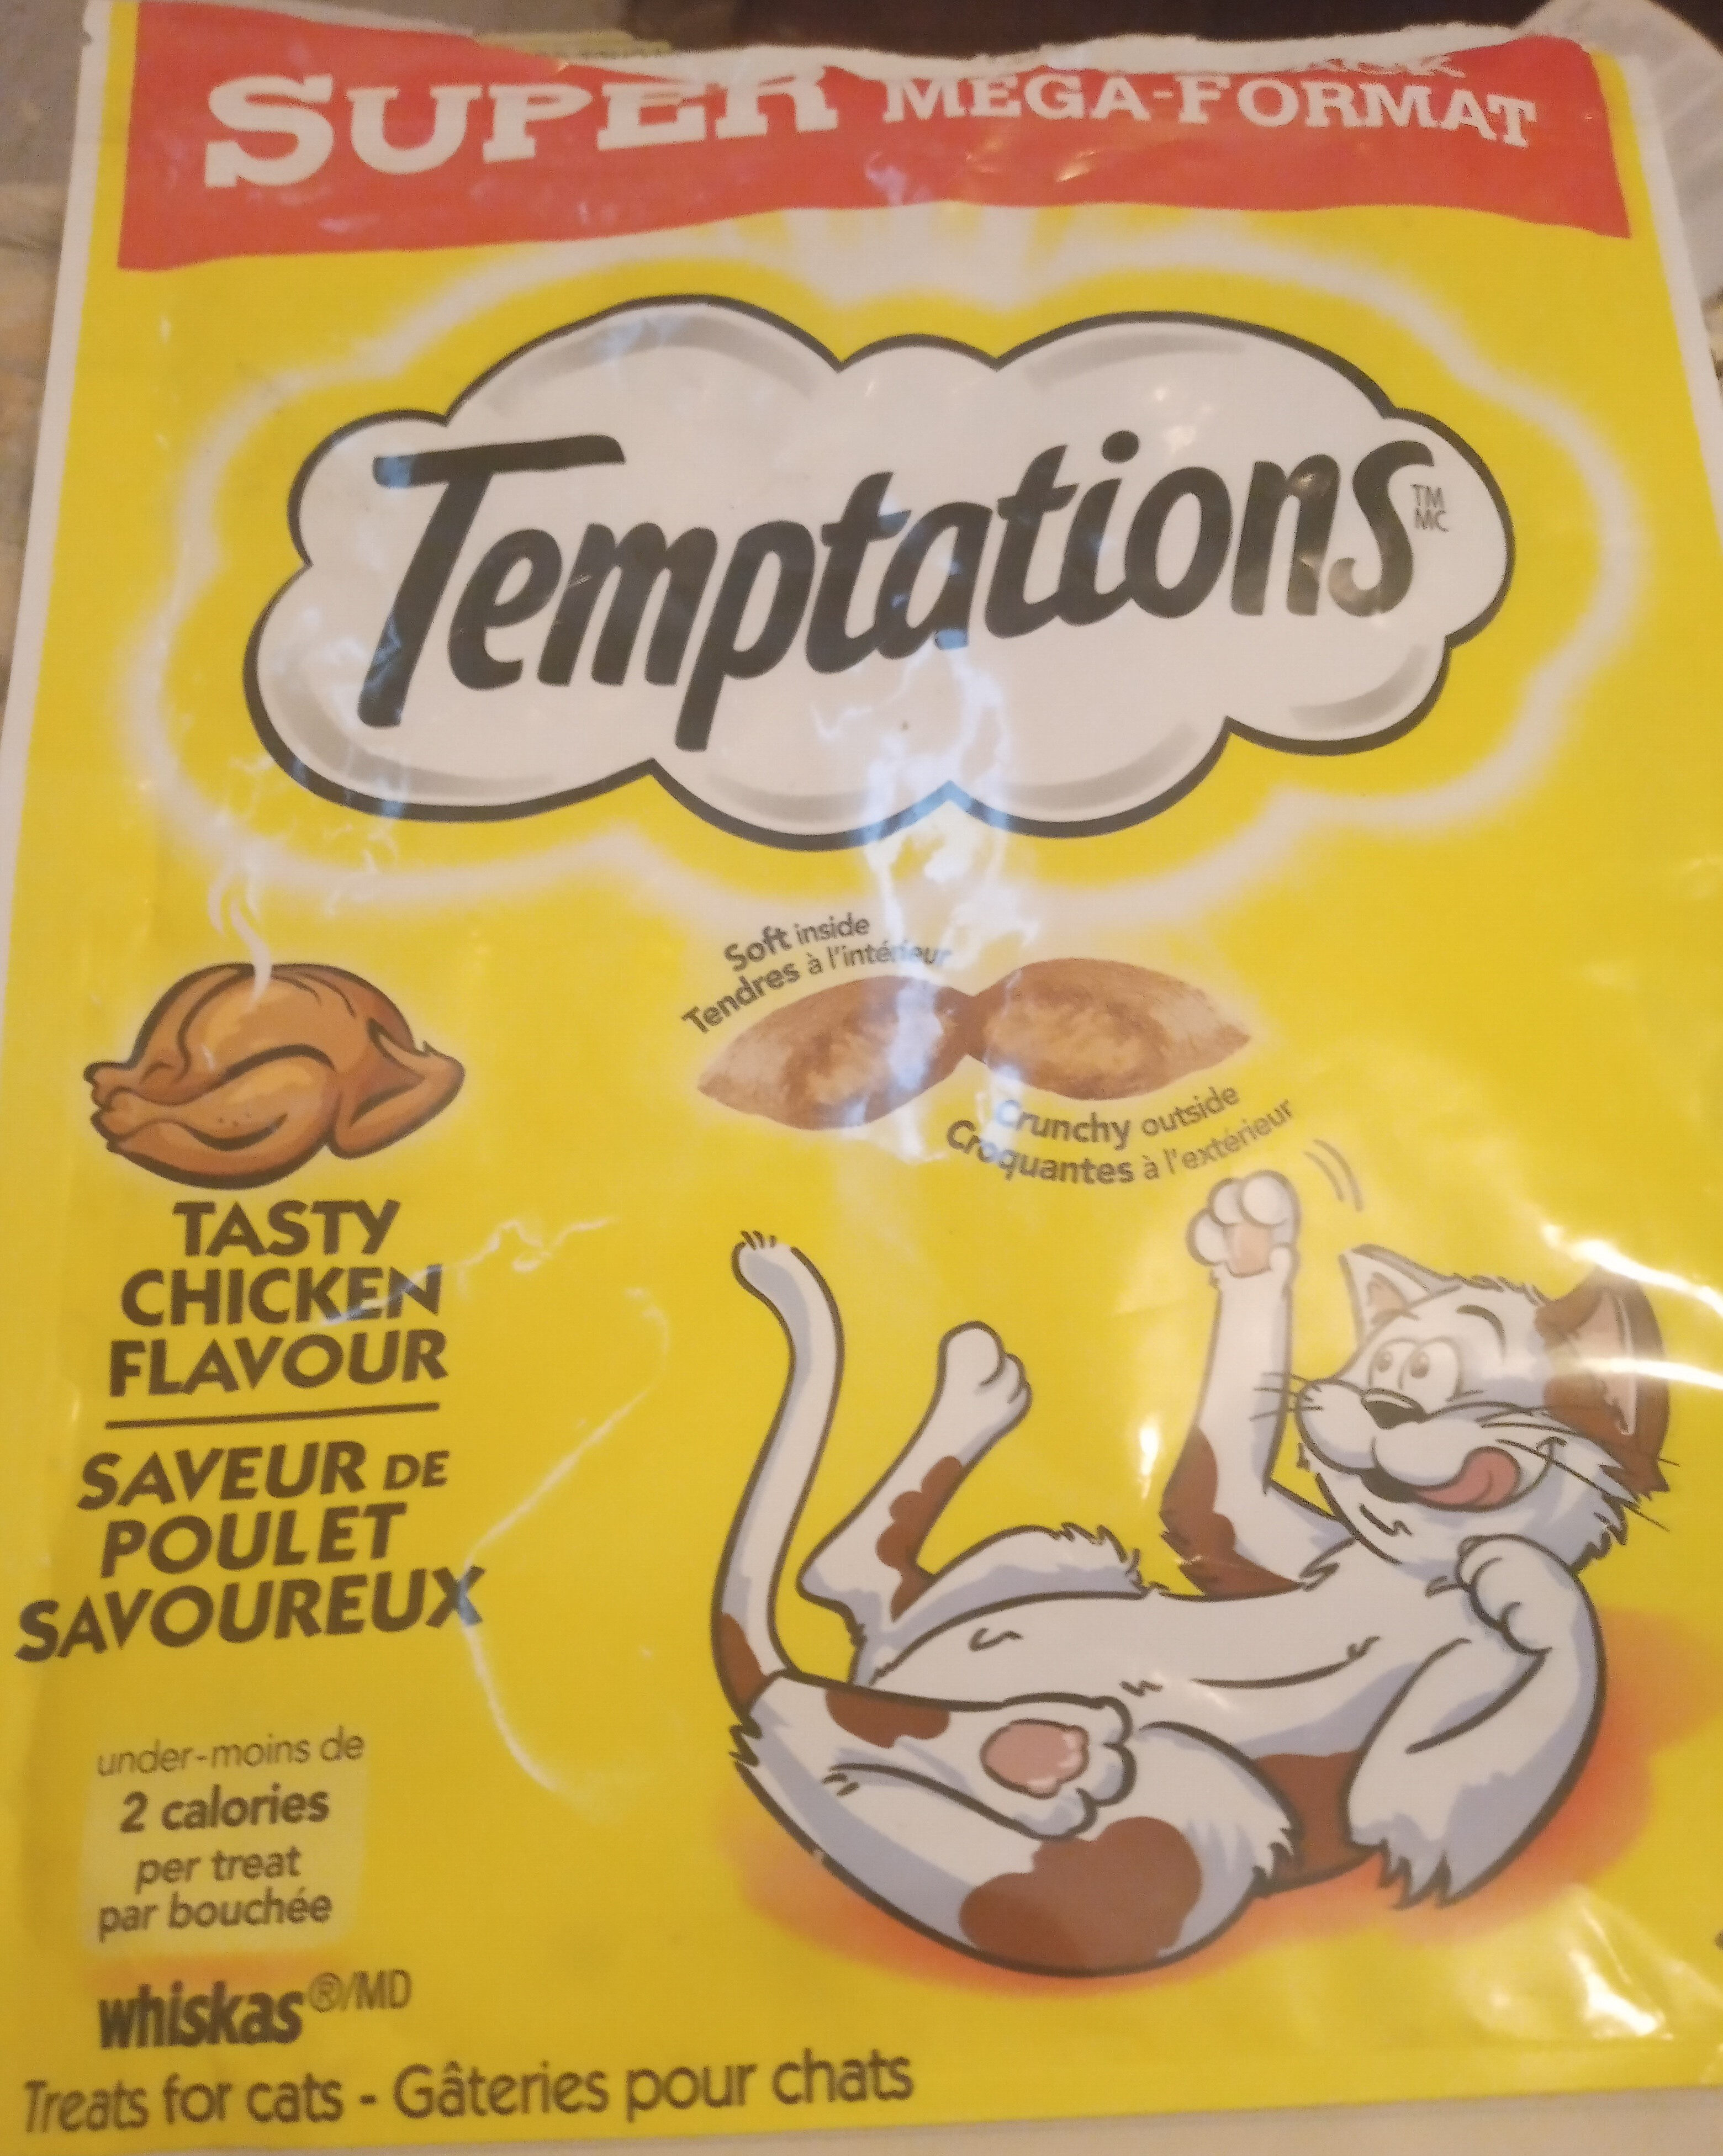 Temptations - Product - en